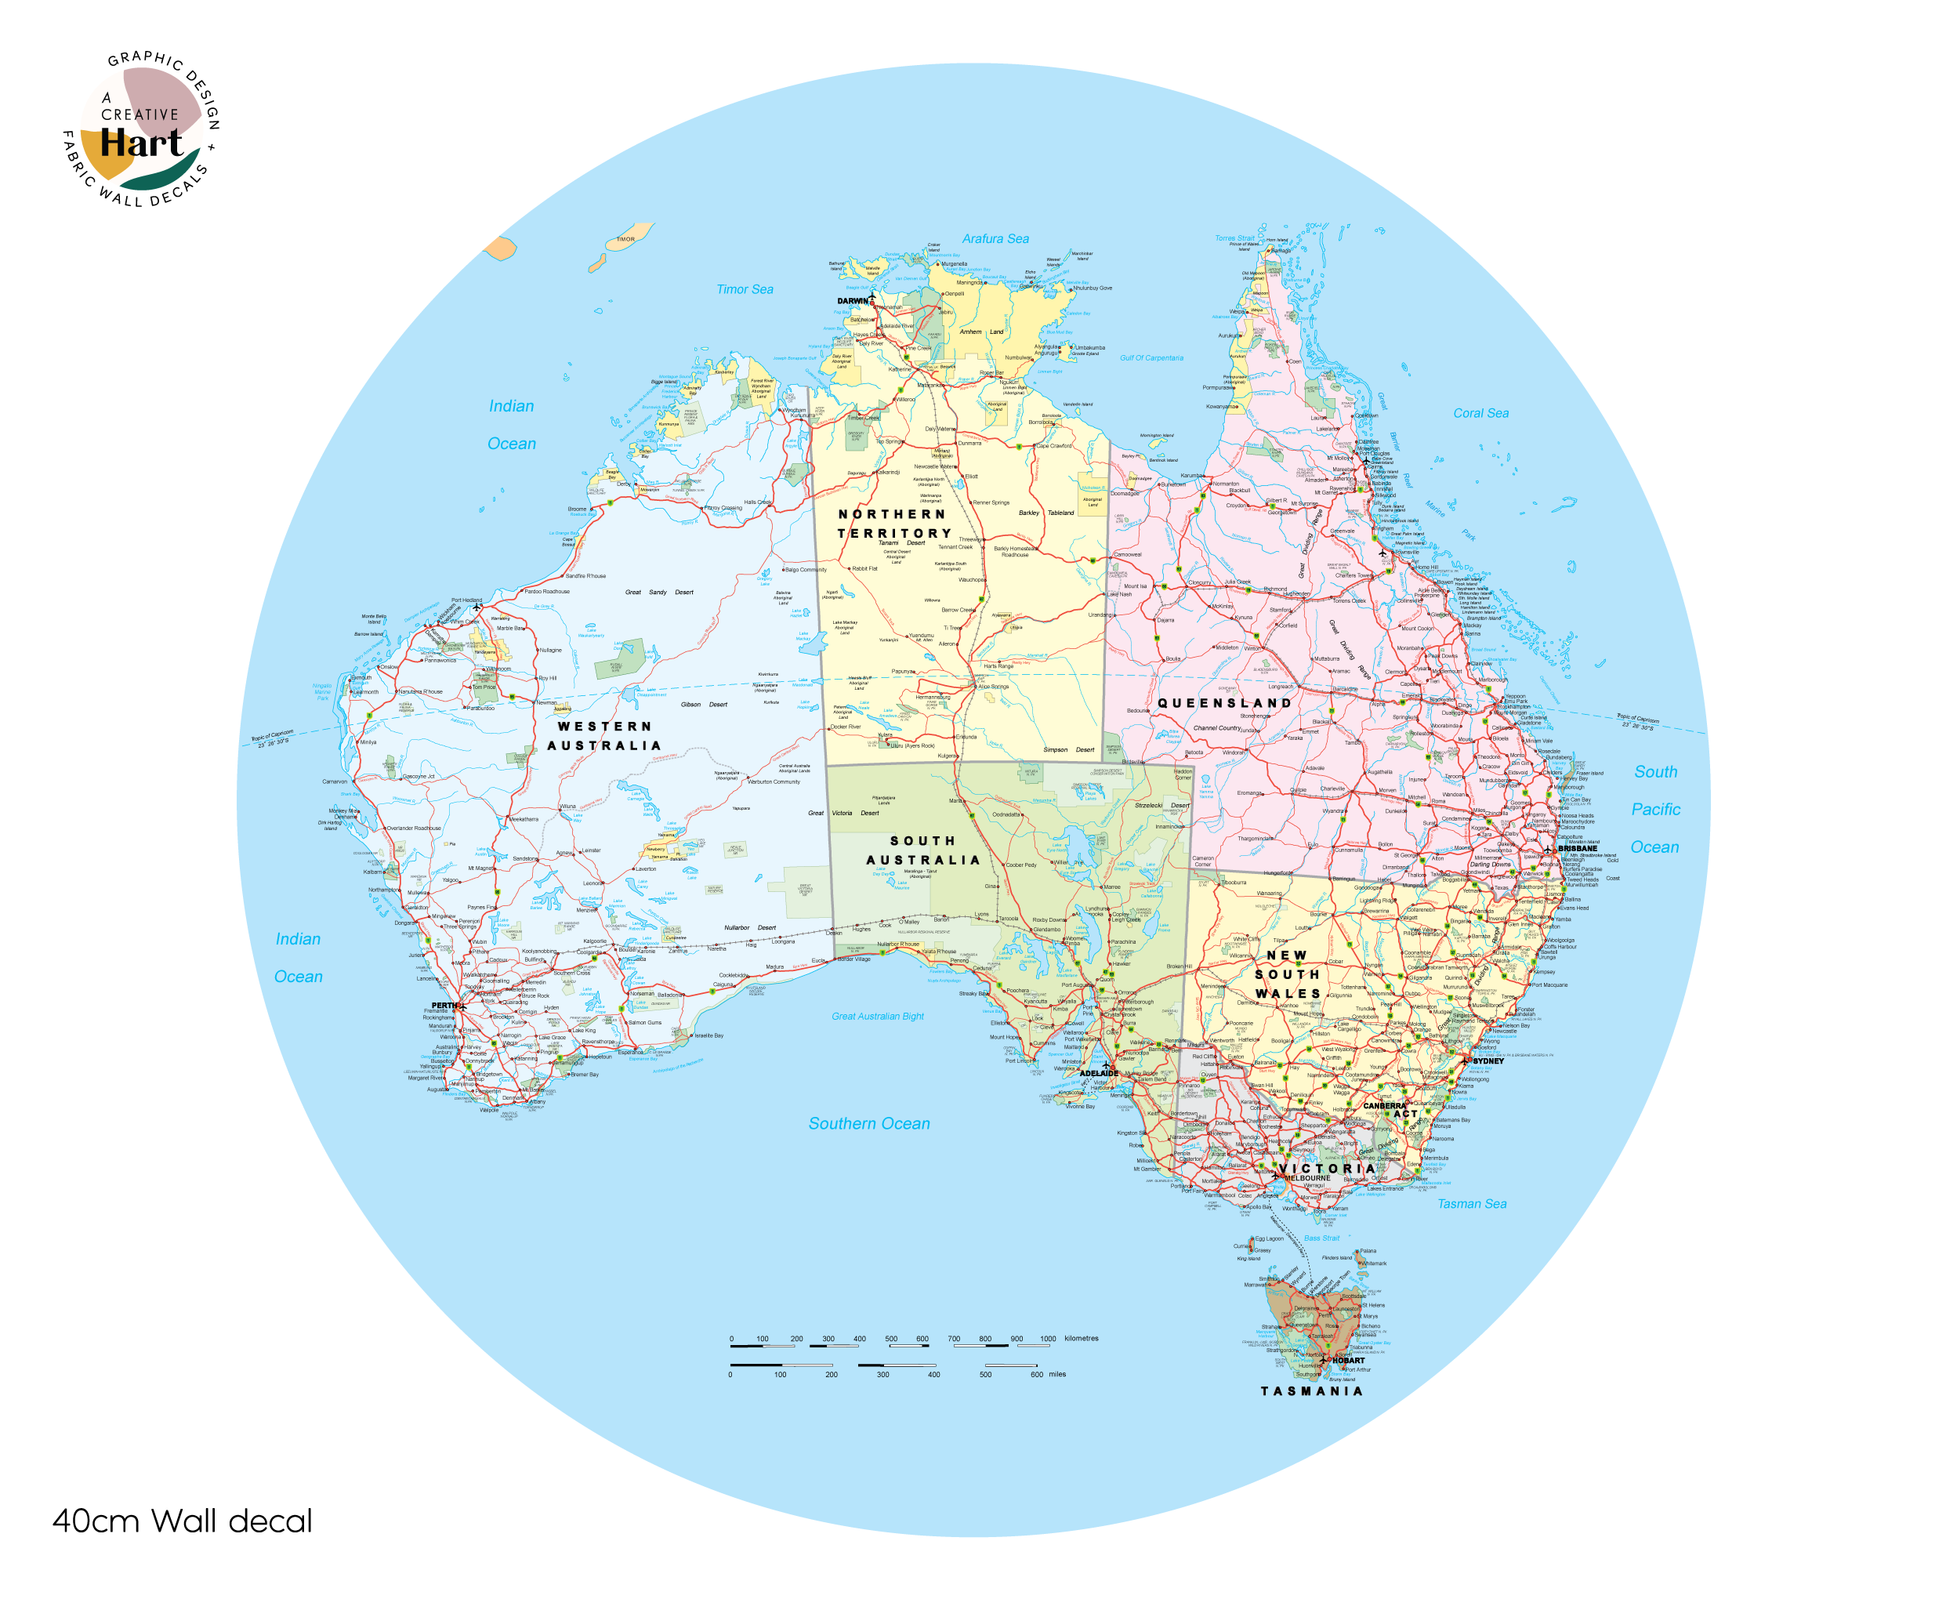 Australia Road Trip Map - A Creative Hart